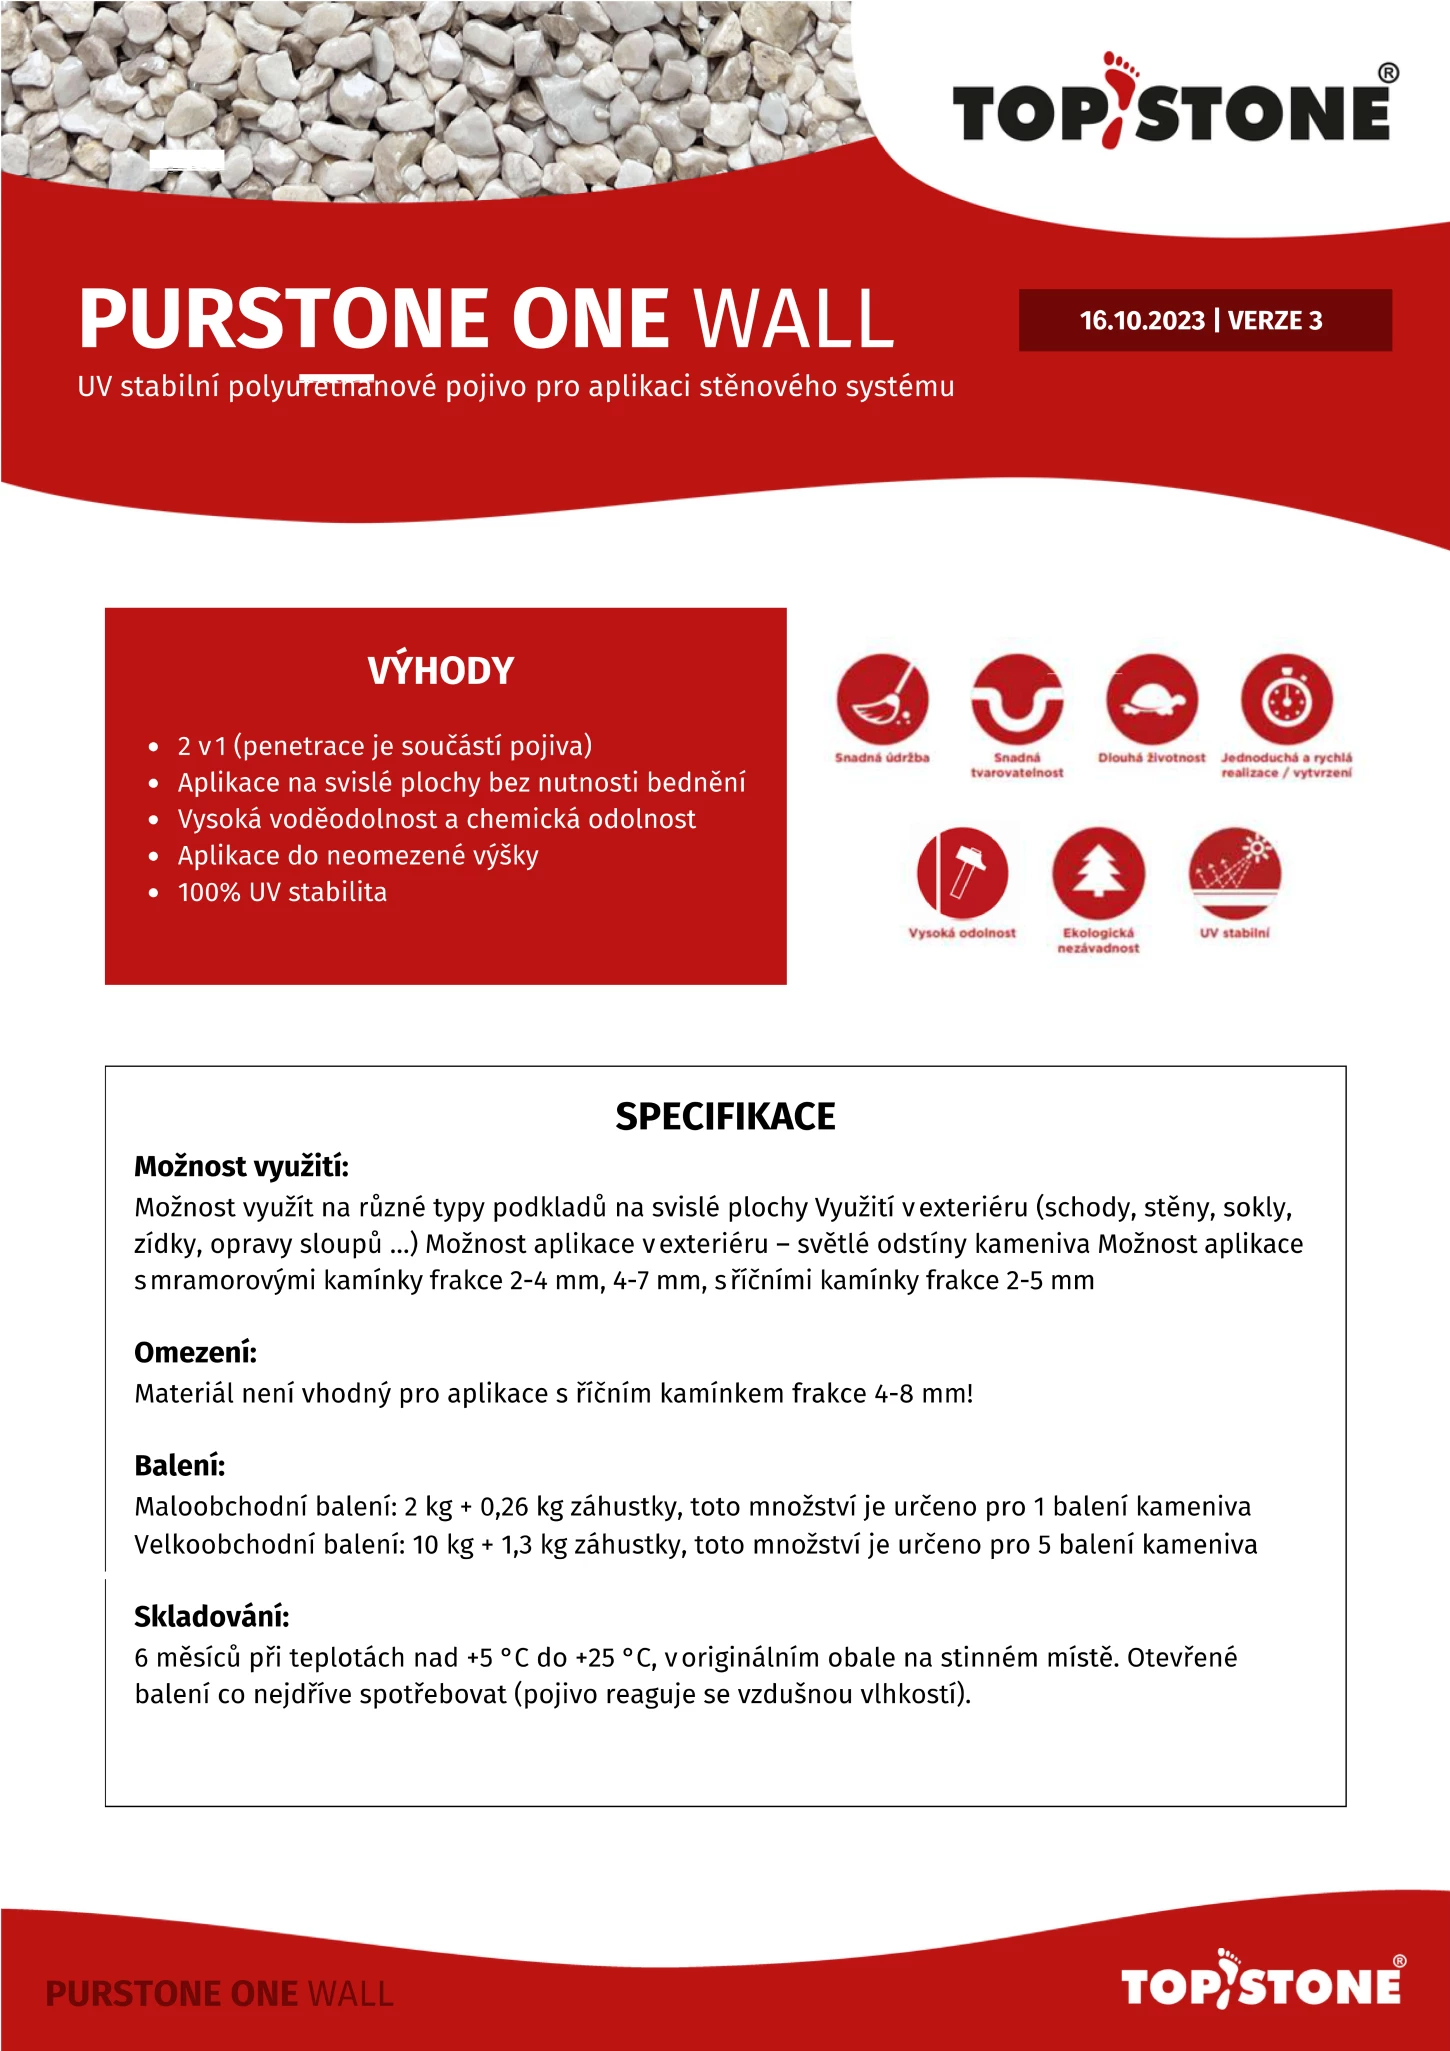 PurStone-One-Wall_1.jpg